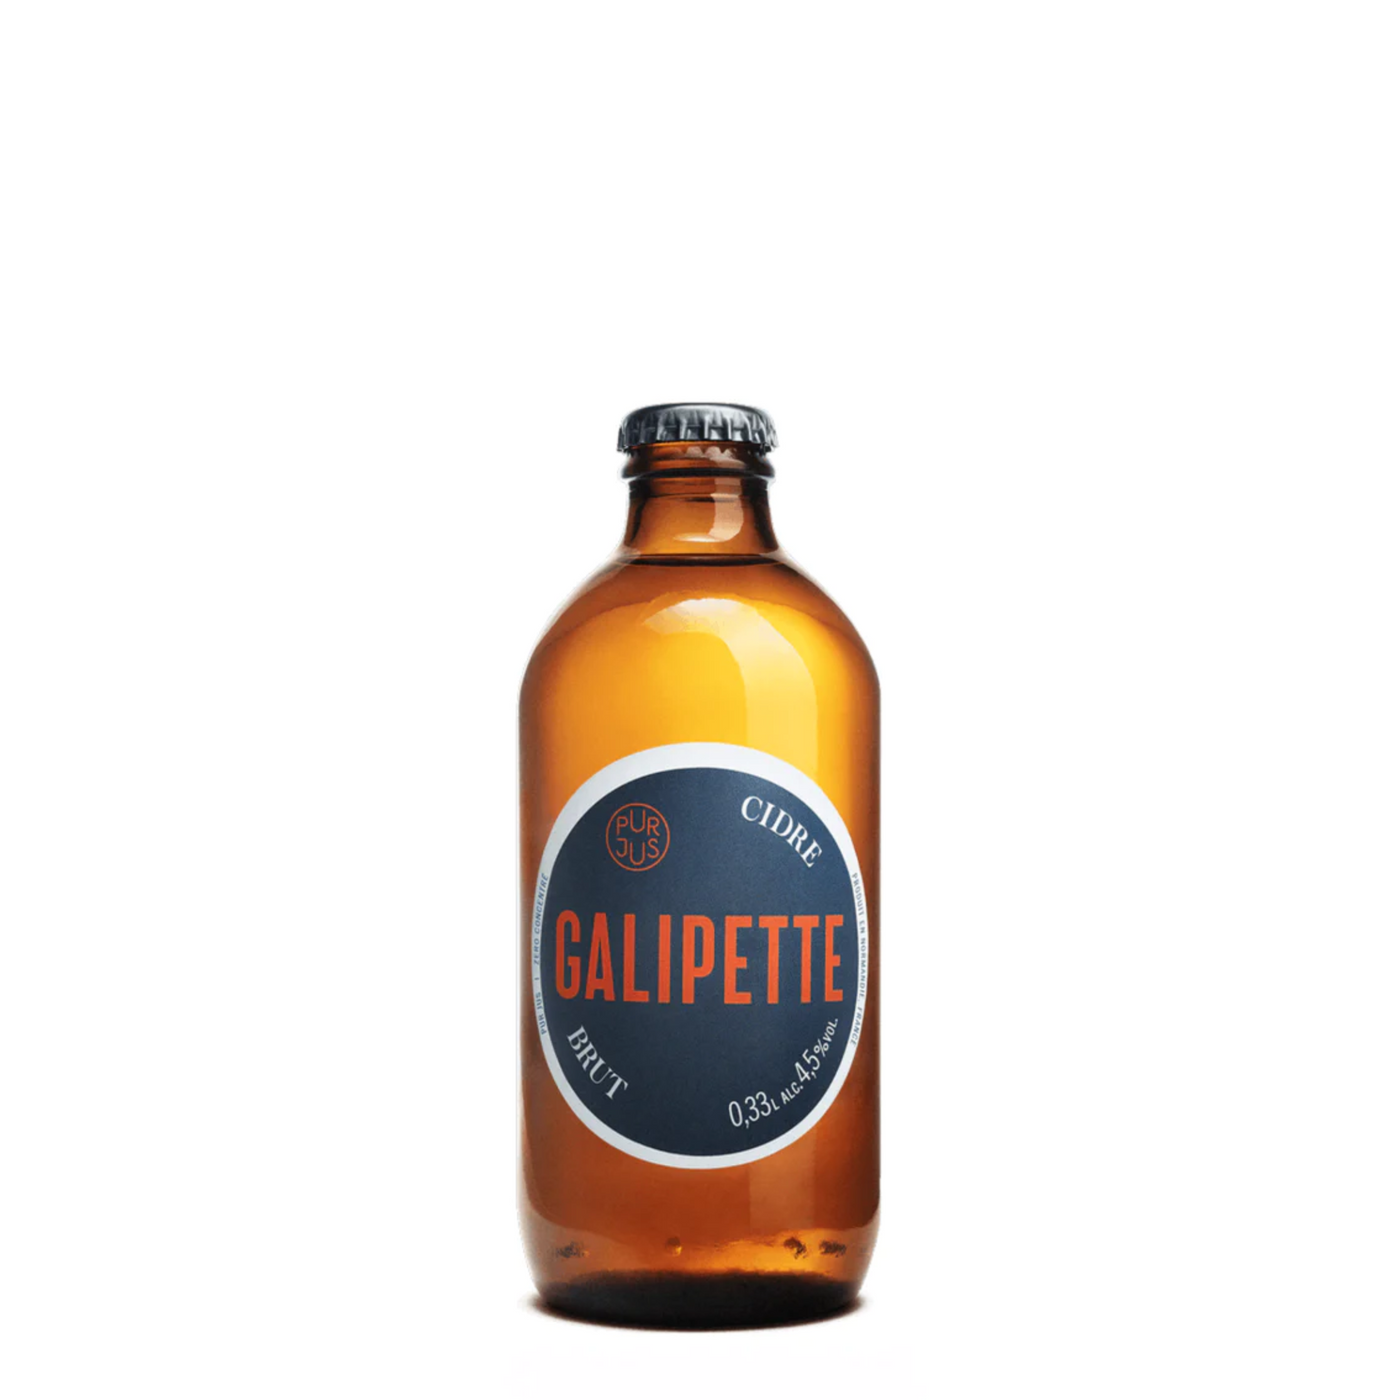 Galipette Brut Cidre 4.5% NRB